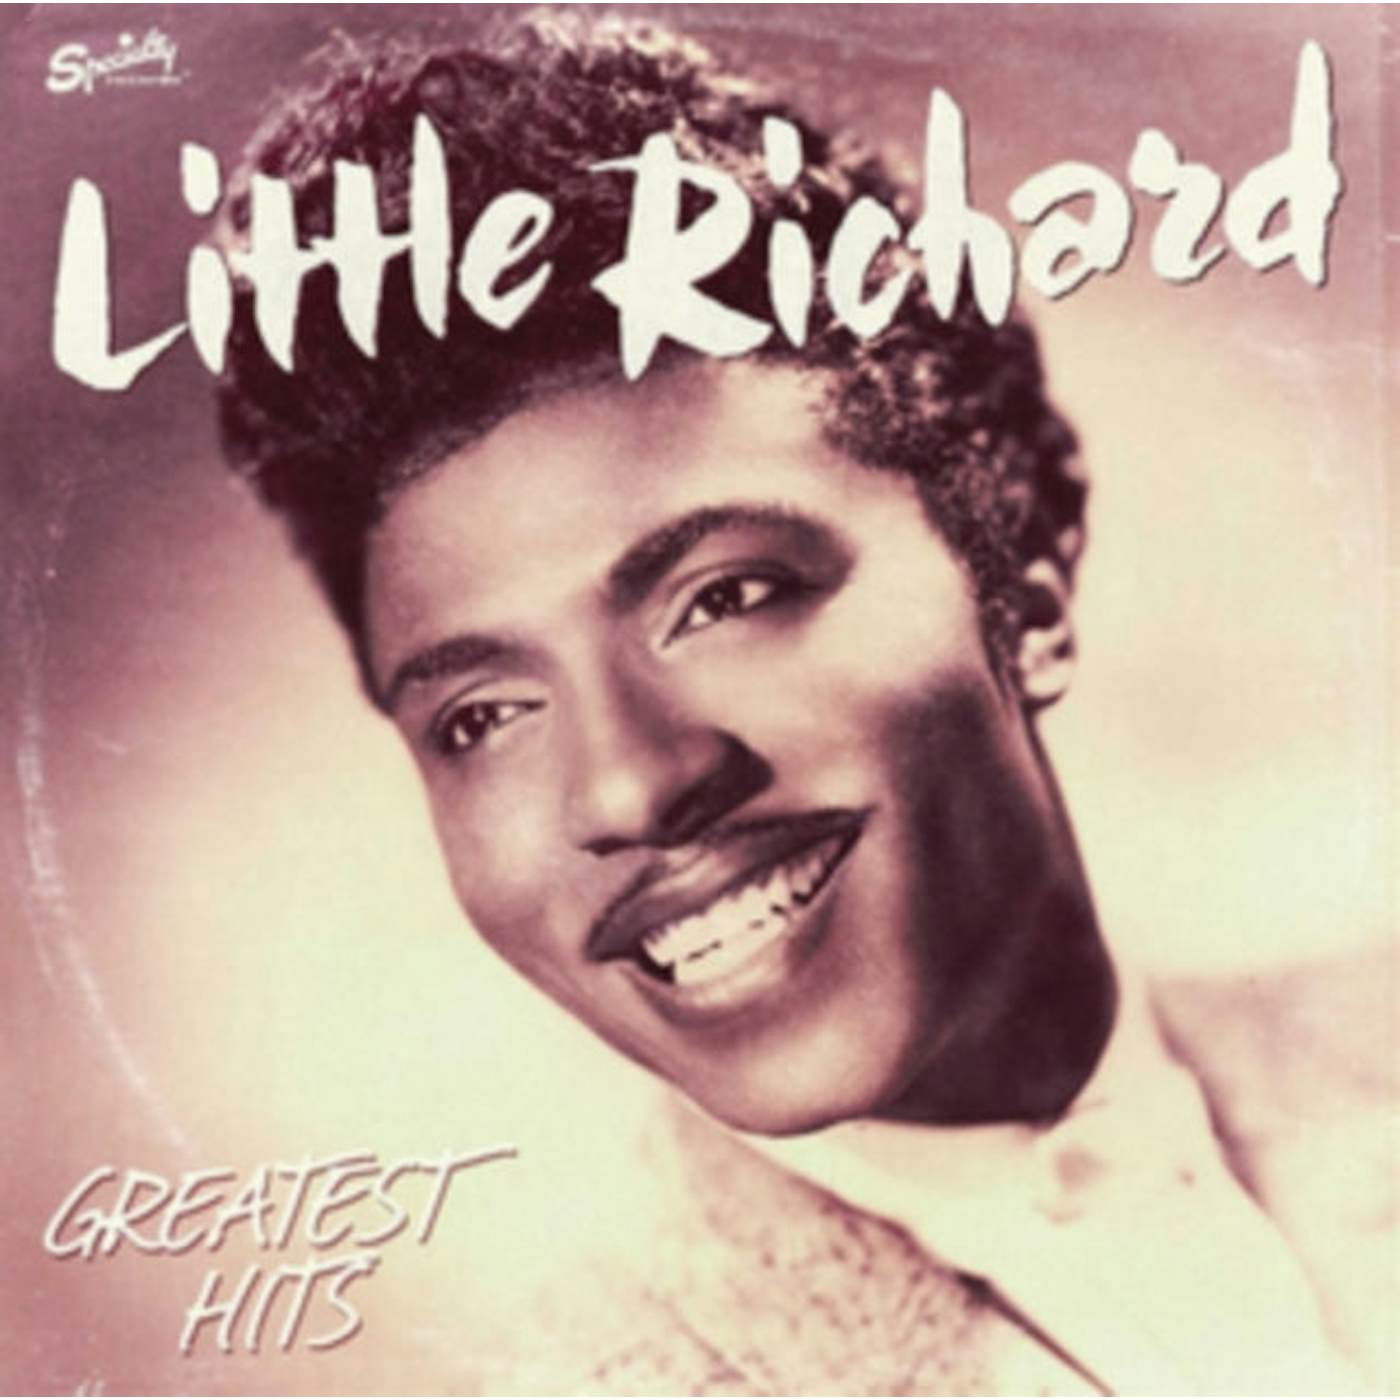 Little Richard LP Vinyl Record - Greatest Hits